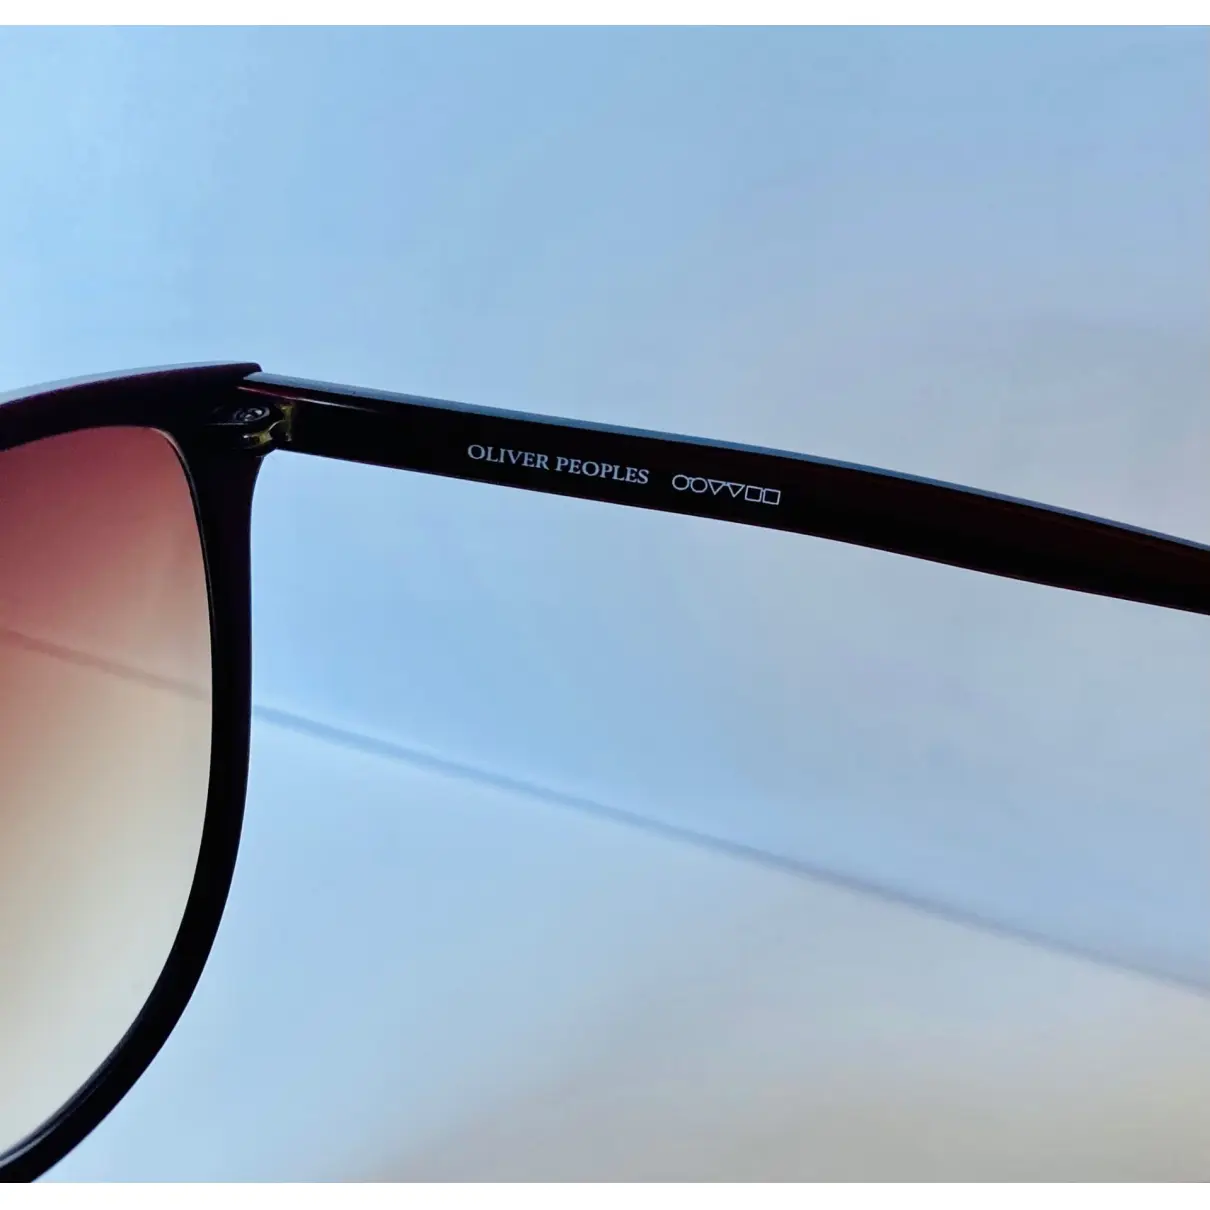 Luxury Oliver Peoples Sunglasses Women